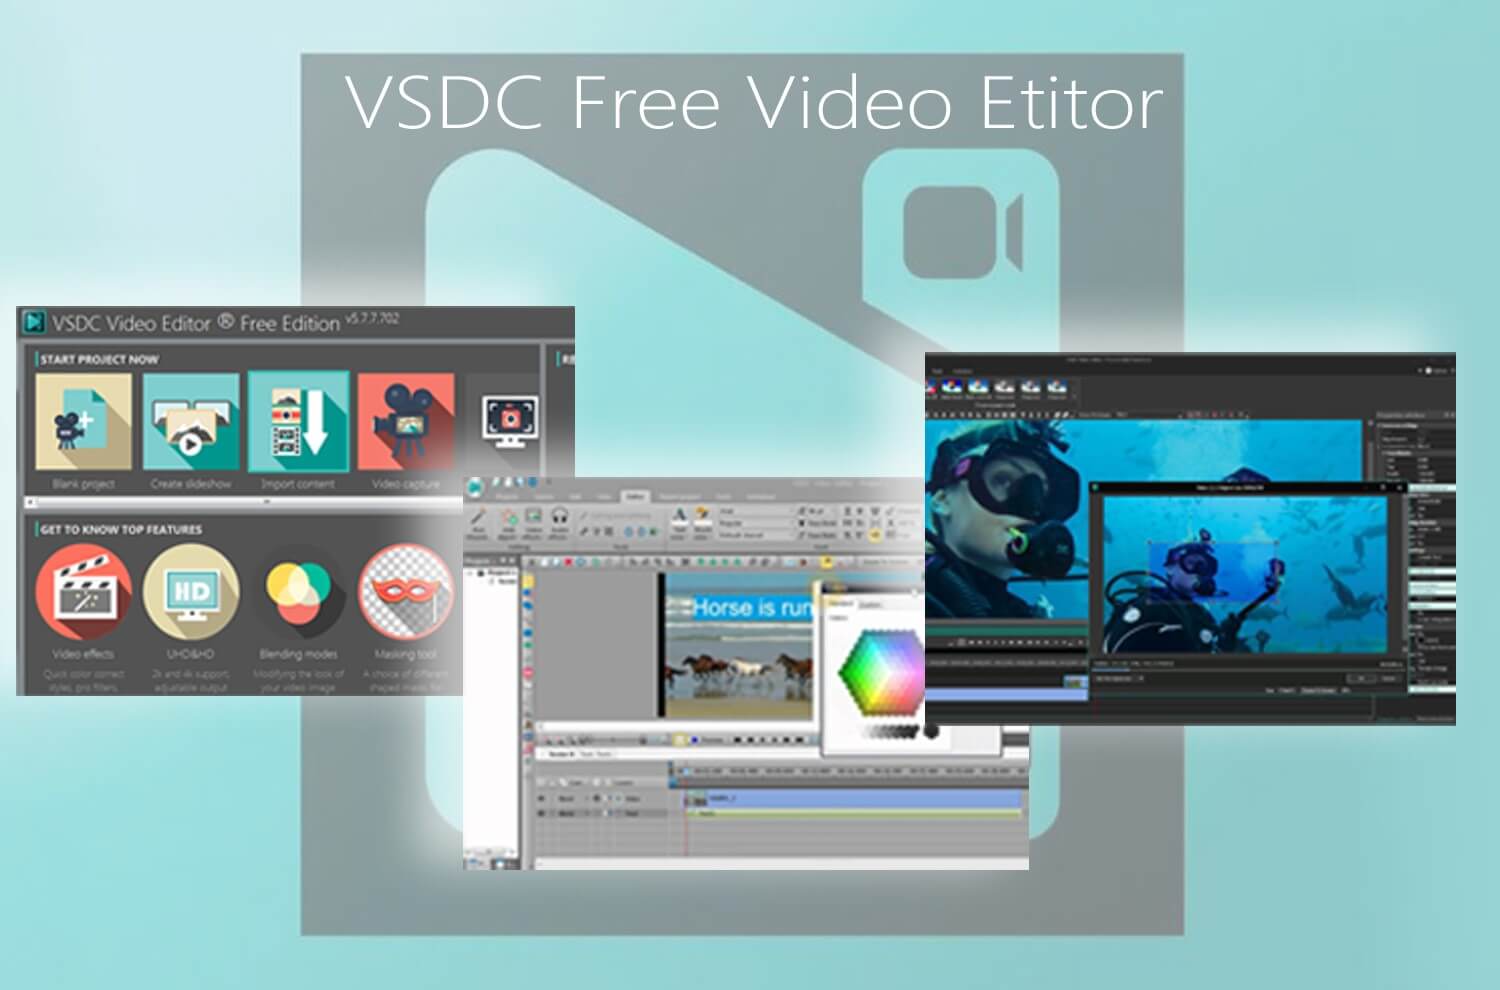 download vsdc video editor pro crack 32 bit